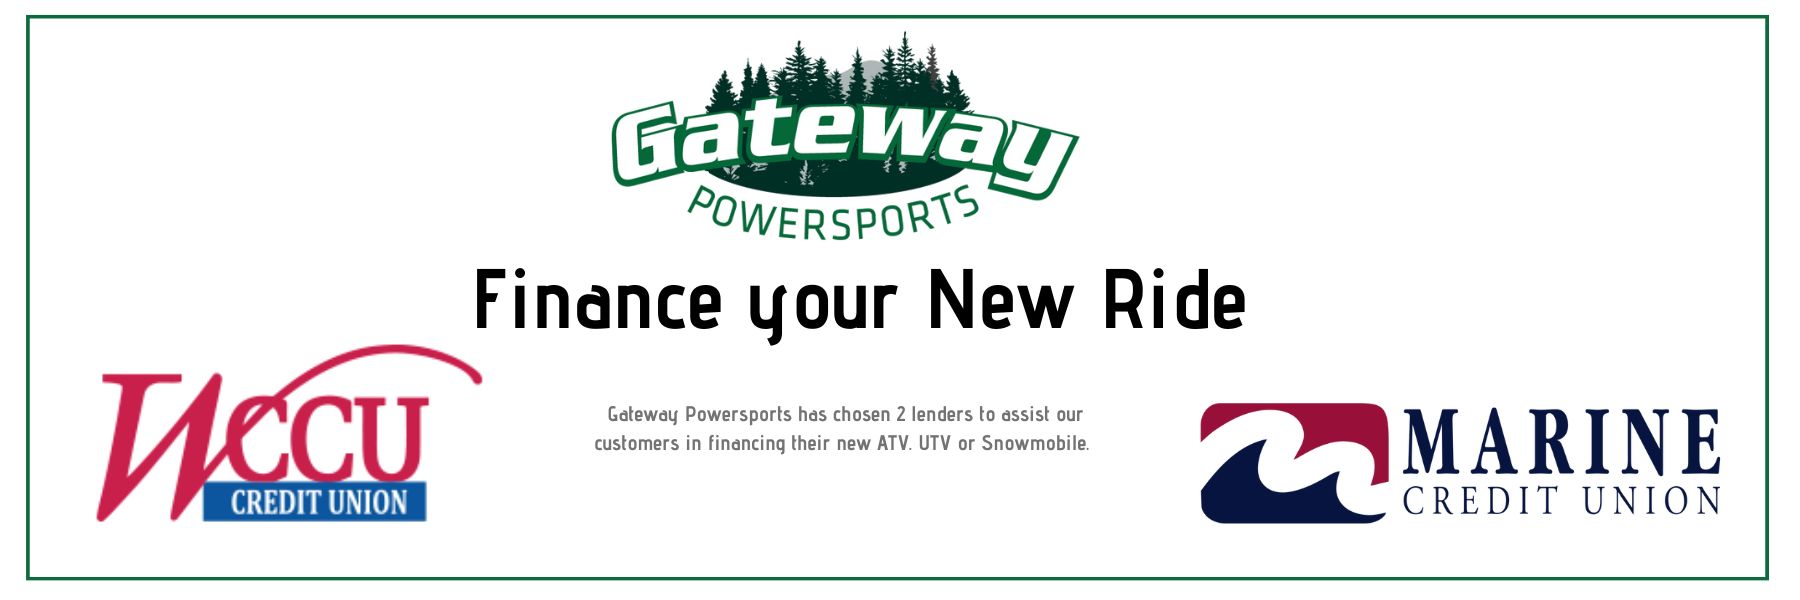 Gateway Powersports Financing